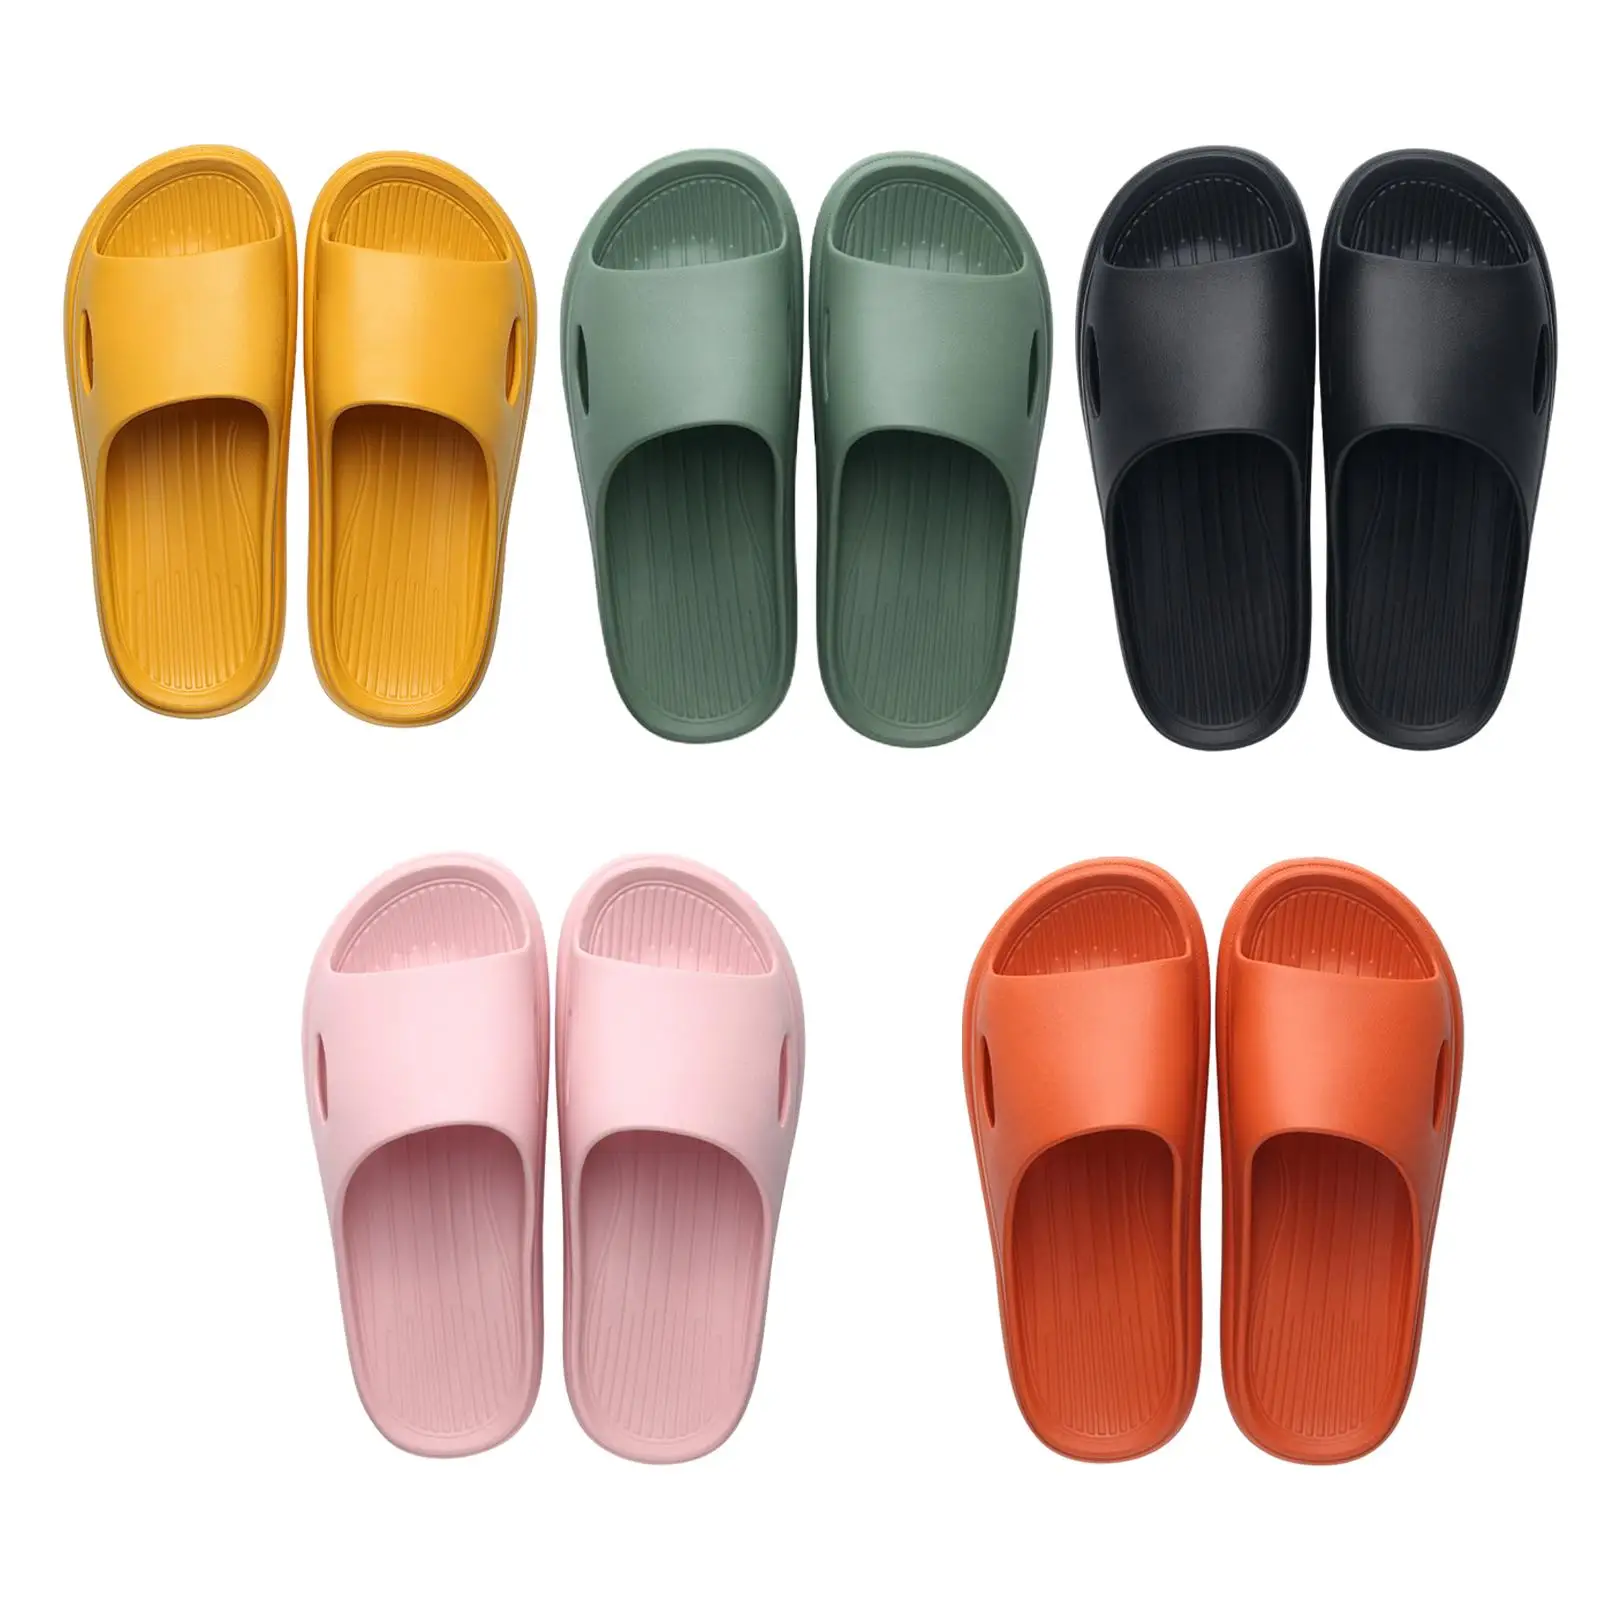 Comfortable Home Slippers Open Toe Bathing Slip-On Sandals EVA Non-Slip Fashion Shoes for Bedroom House Bathroom Indoor Women